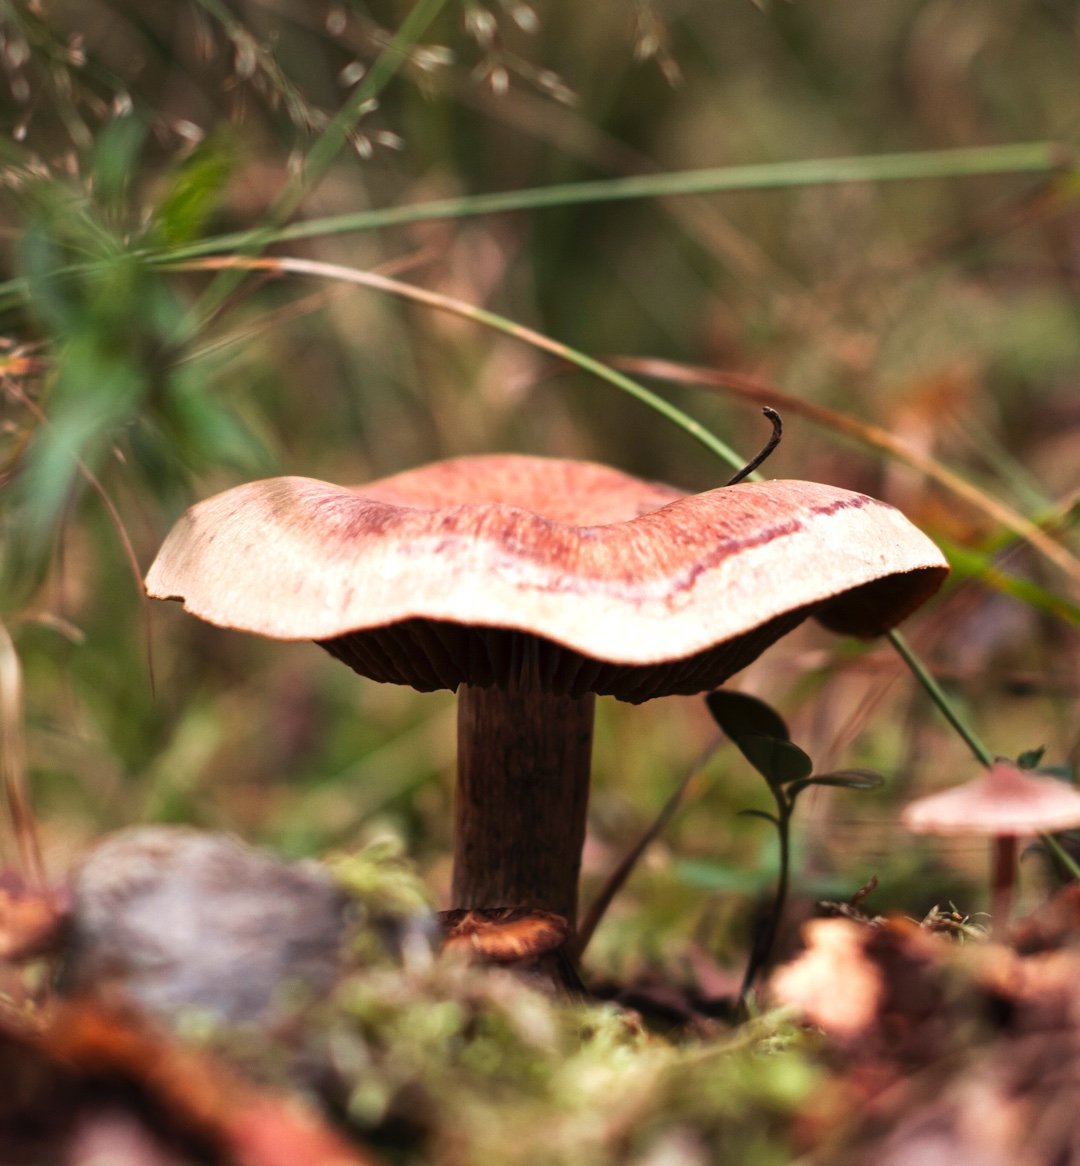 Mountain mushrooms